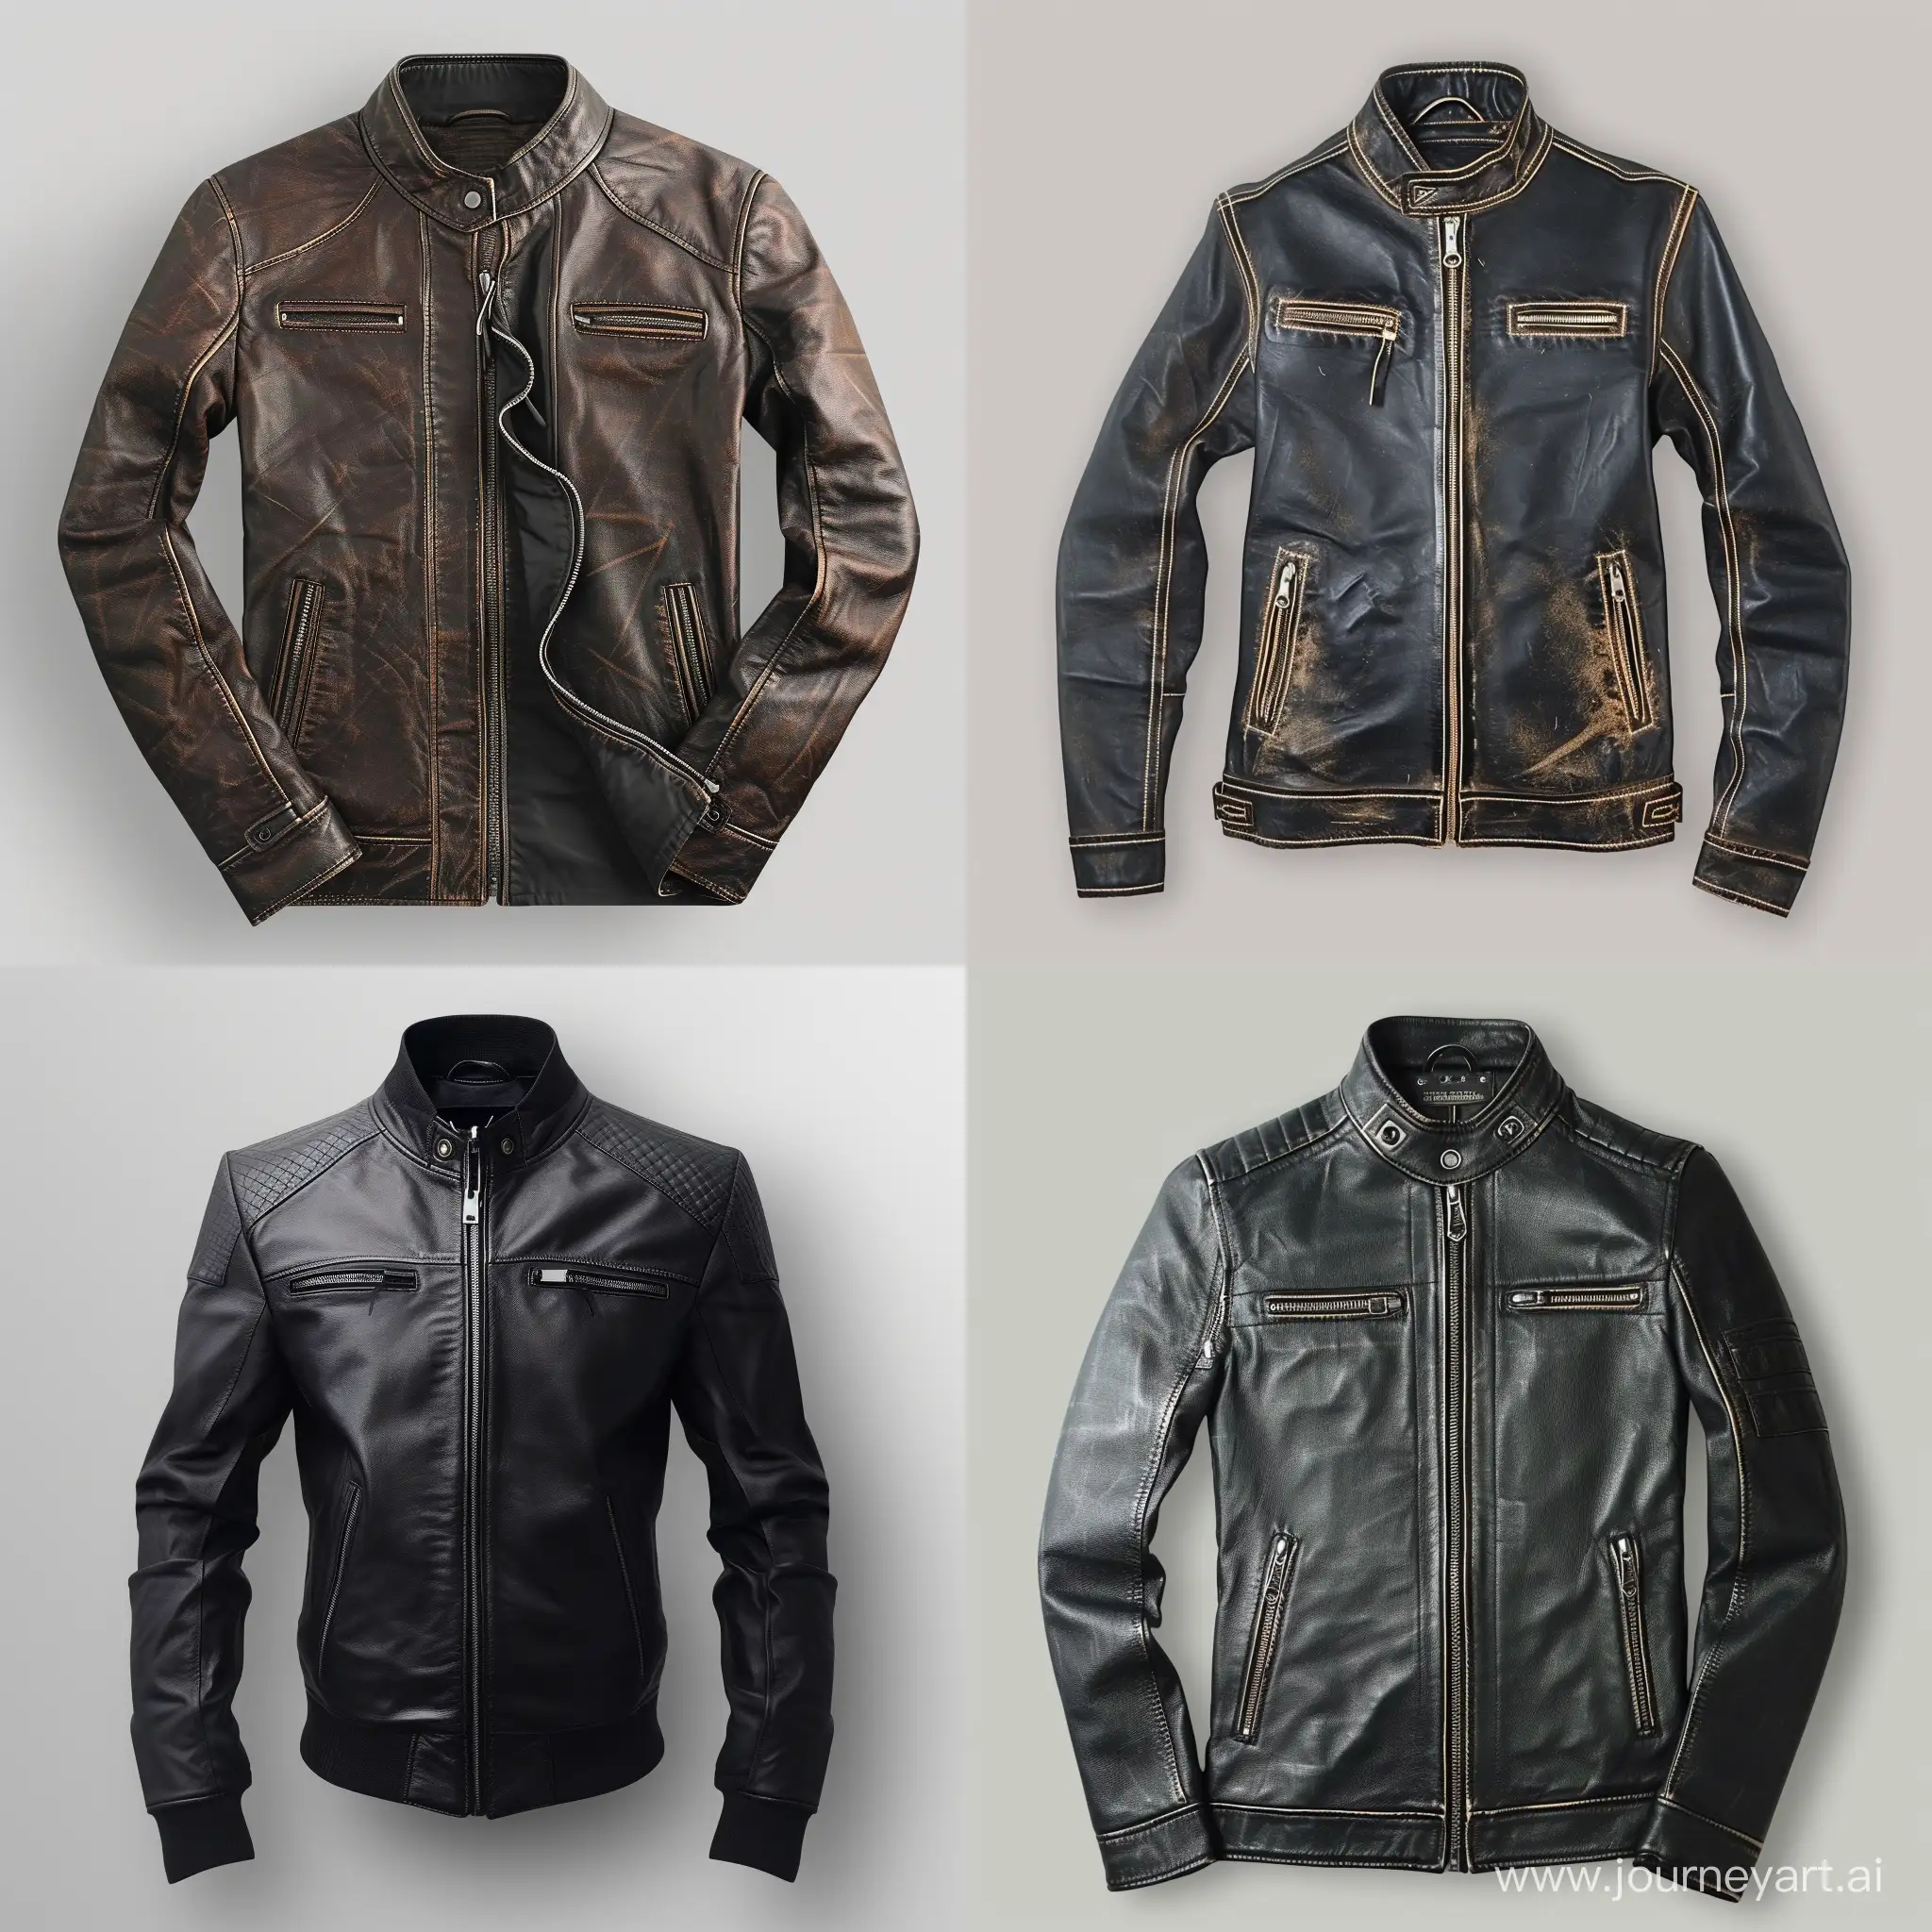 Leather jackets design